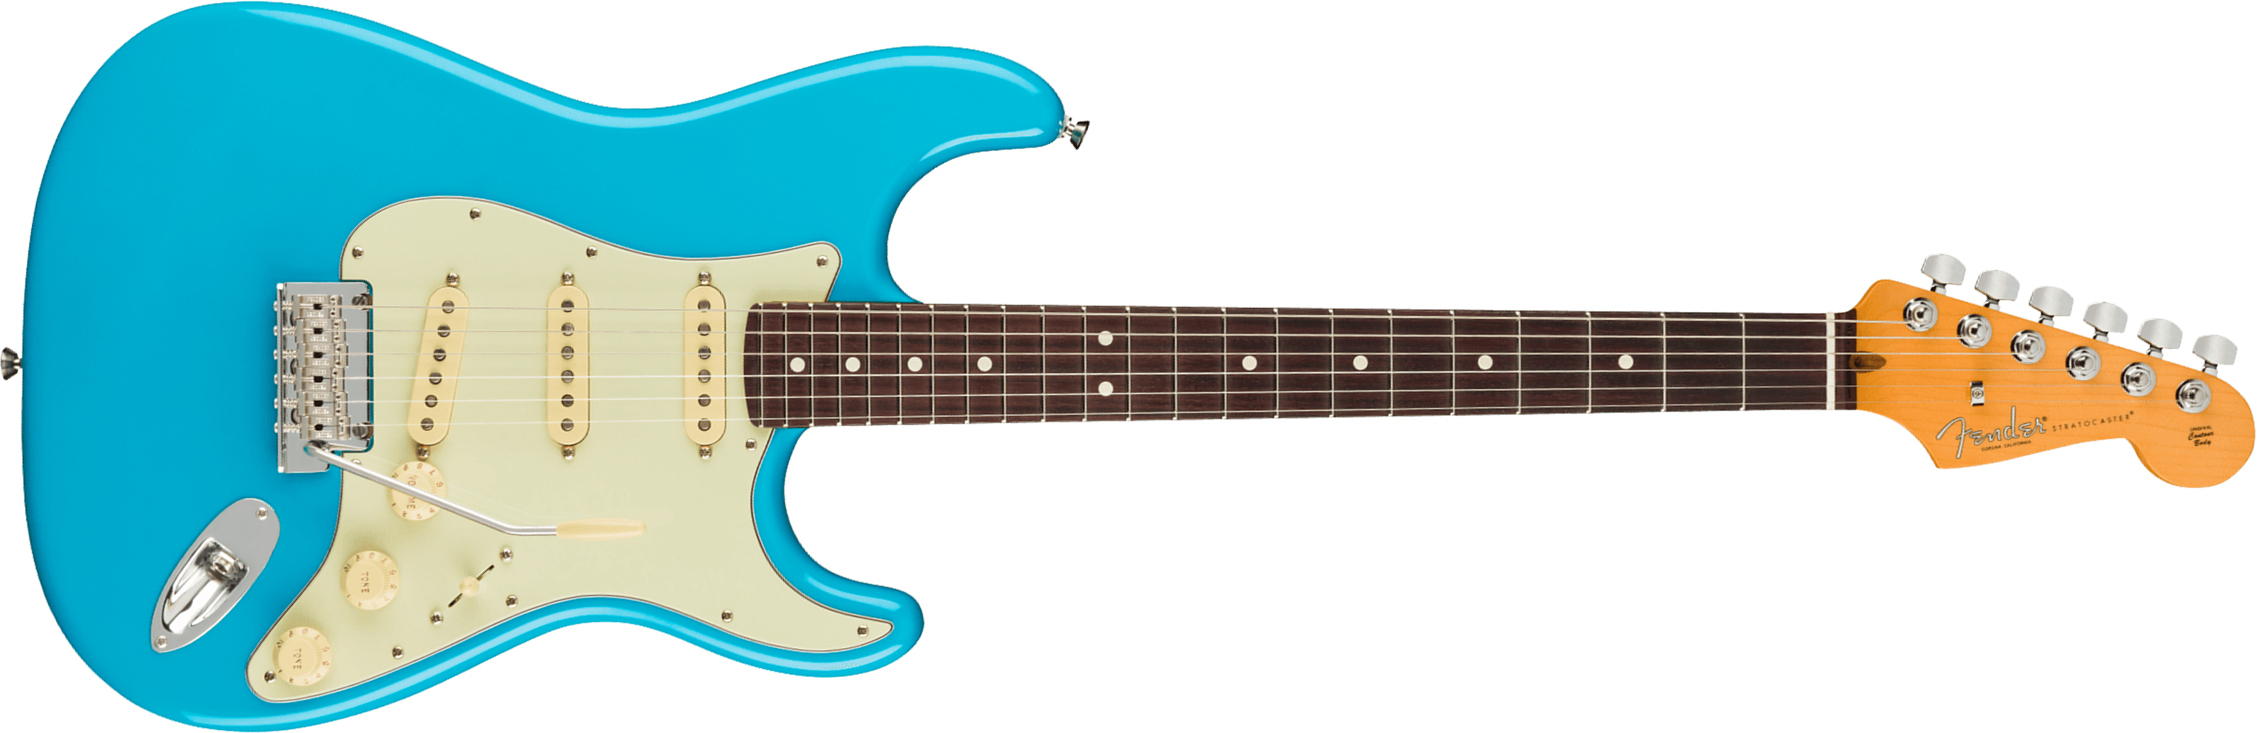 Fender Strat American Professional Ii Usa Rw - Miami Blue - Str shape electric guitar - Main picture